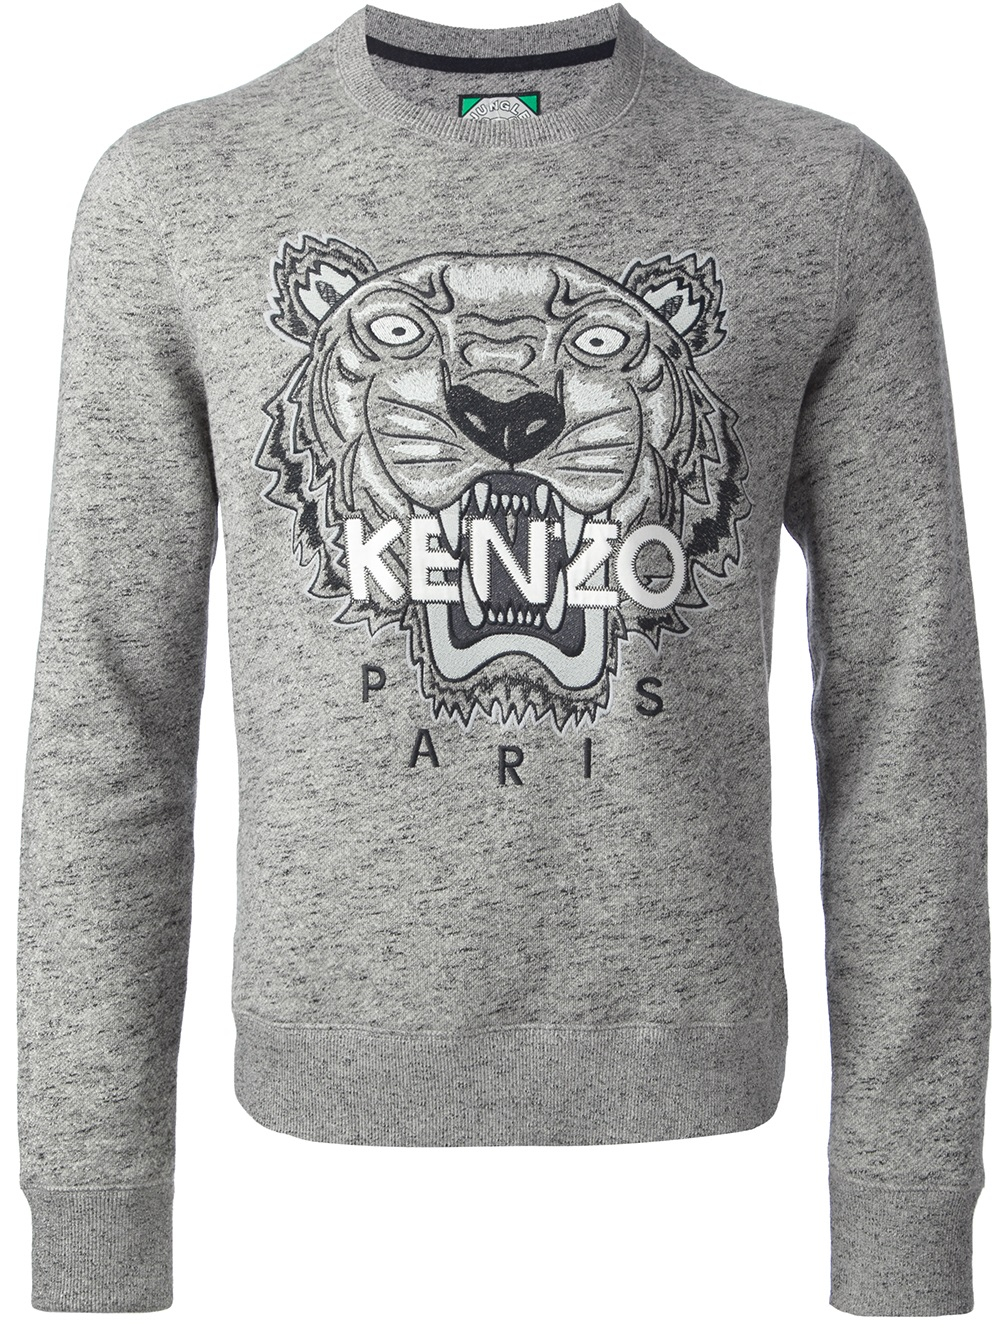 kenzo jumper grey mens